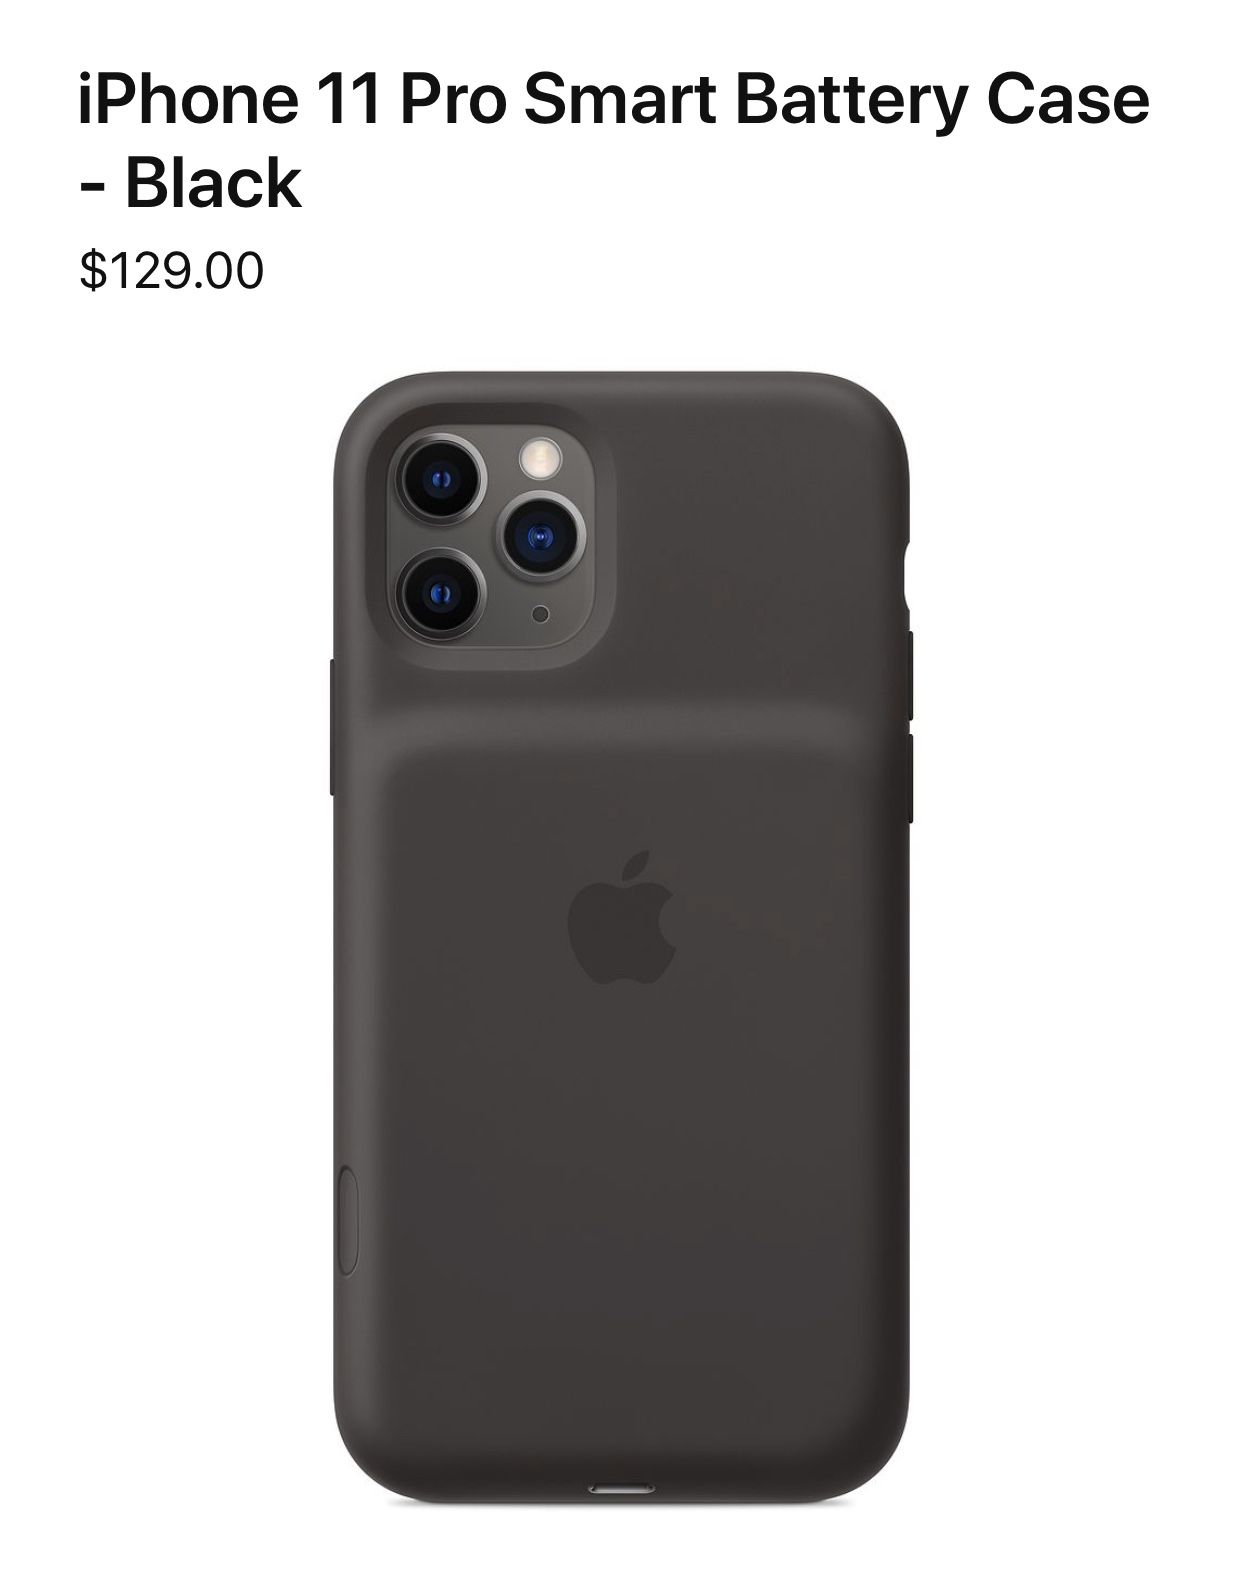 iPhone 11 Pro smart battery case